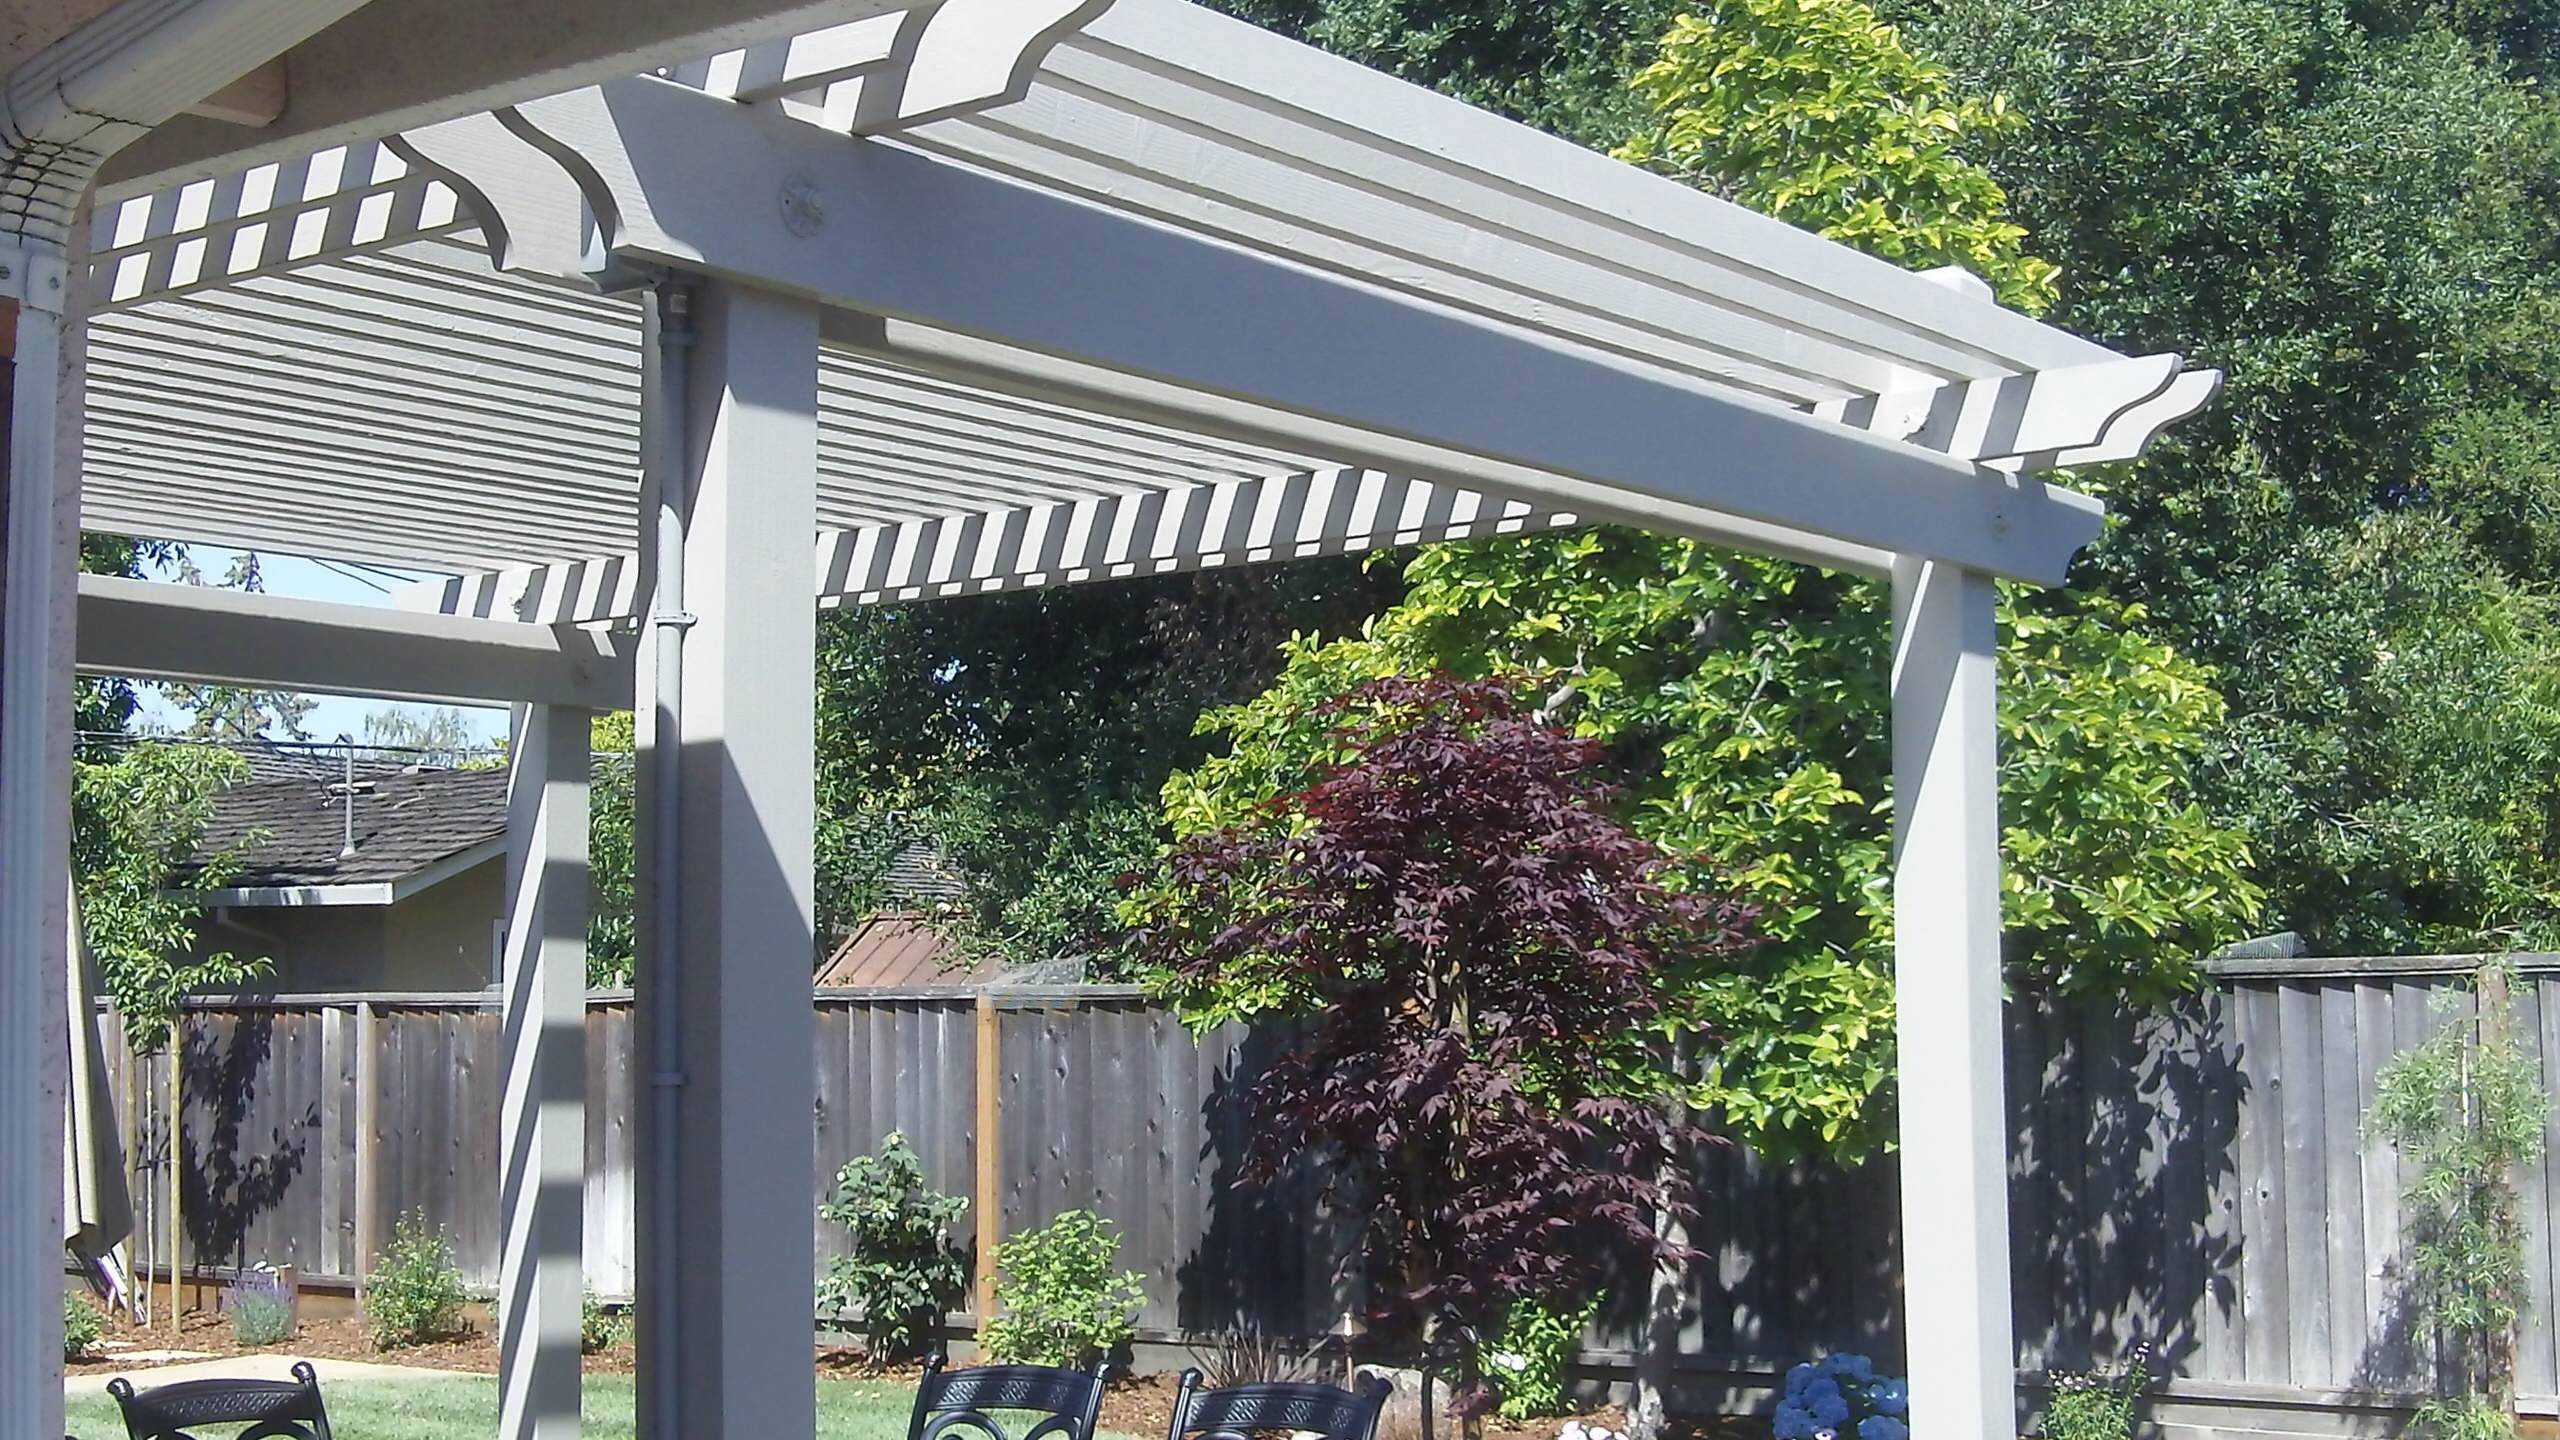 Backyard Pergola Shade Structures